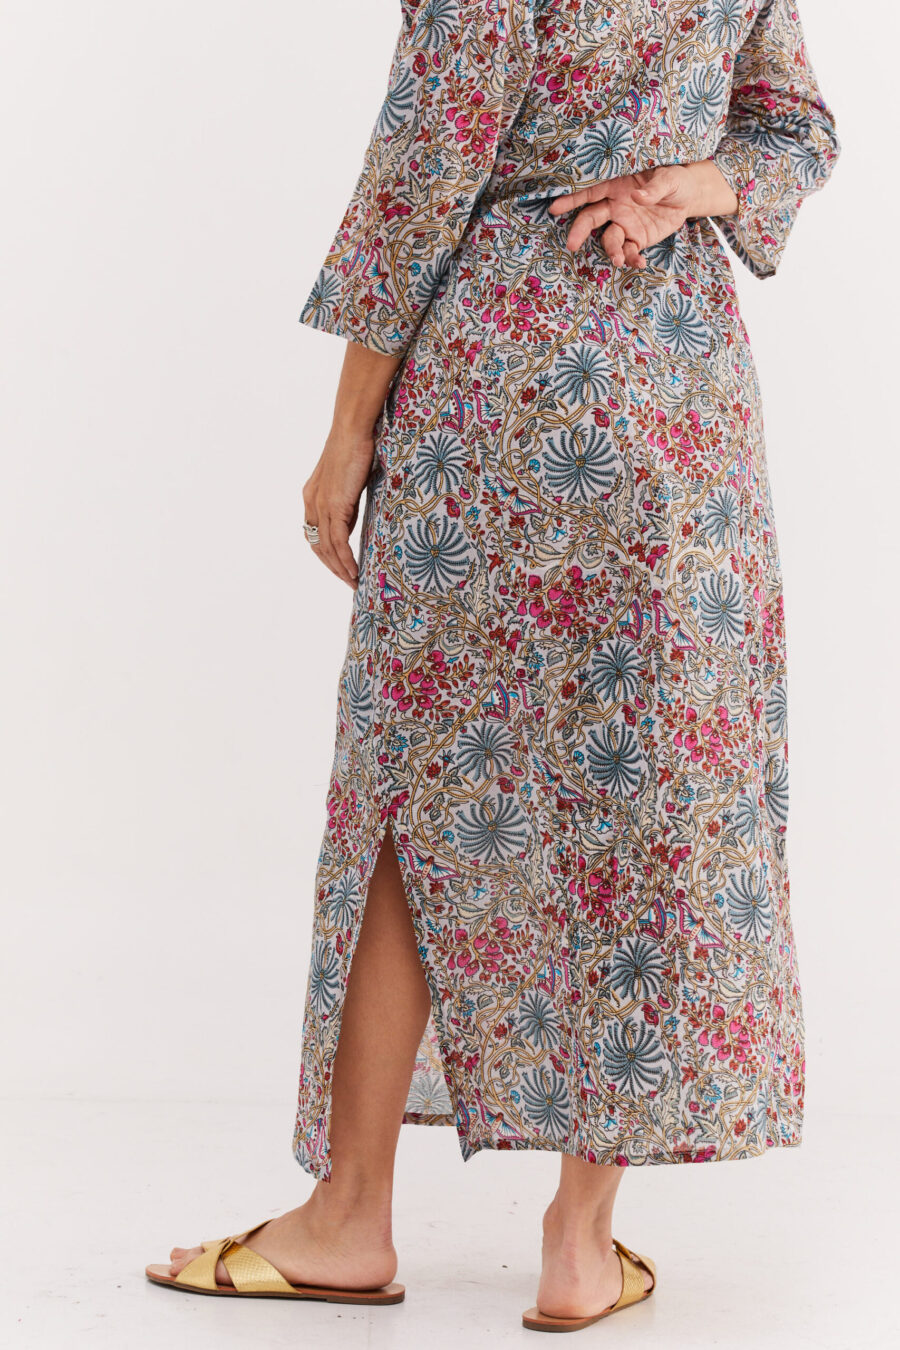 Jalabiya dress | Uniquely designed dress - Libi print, serene floral print on a grey dress by comfort zone boutique